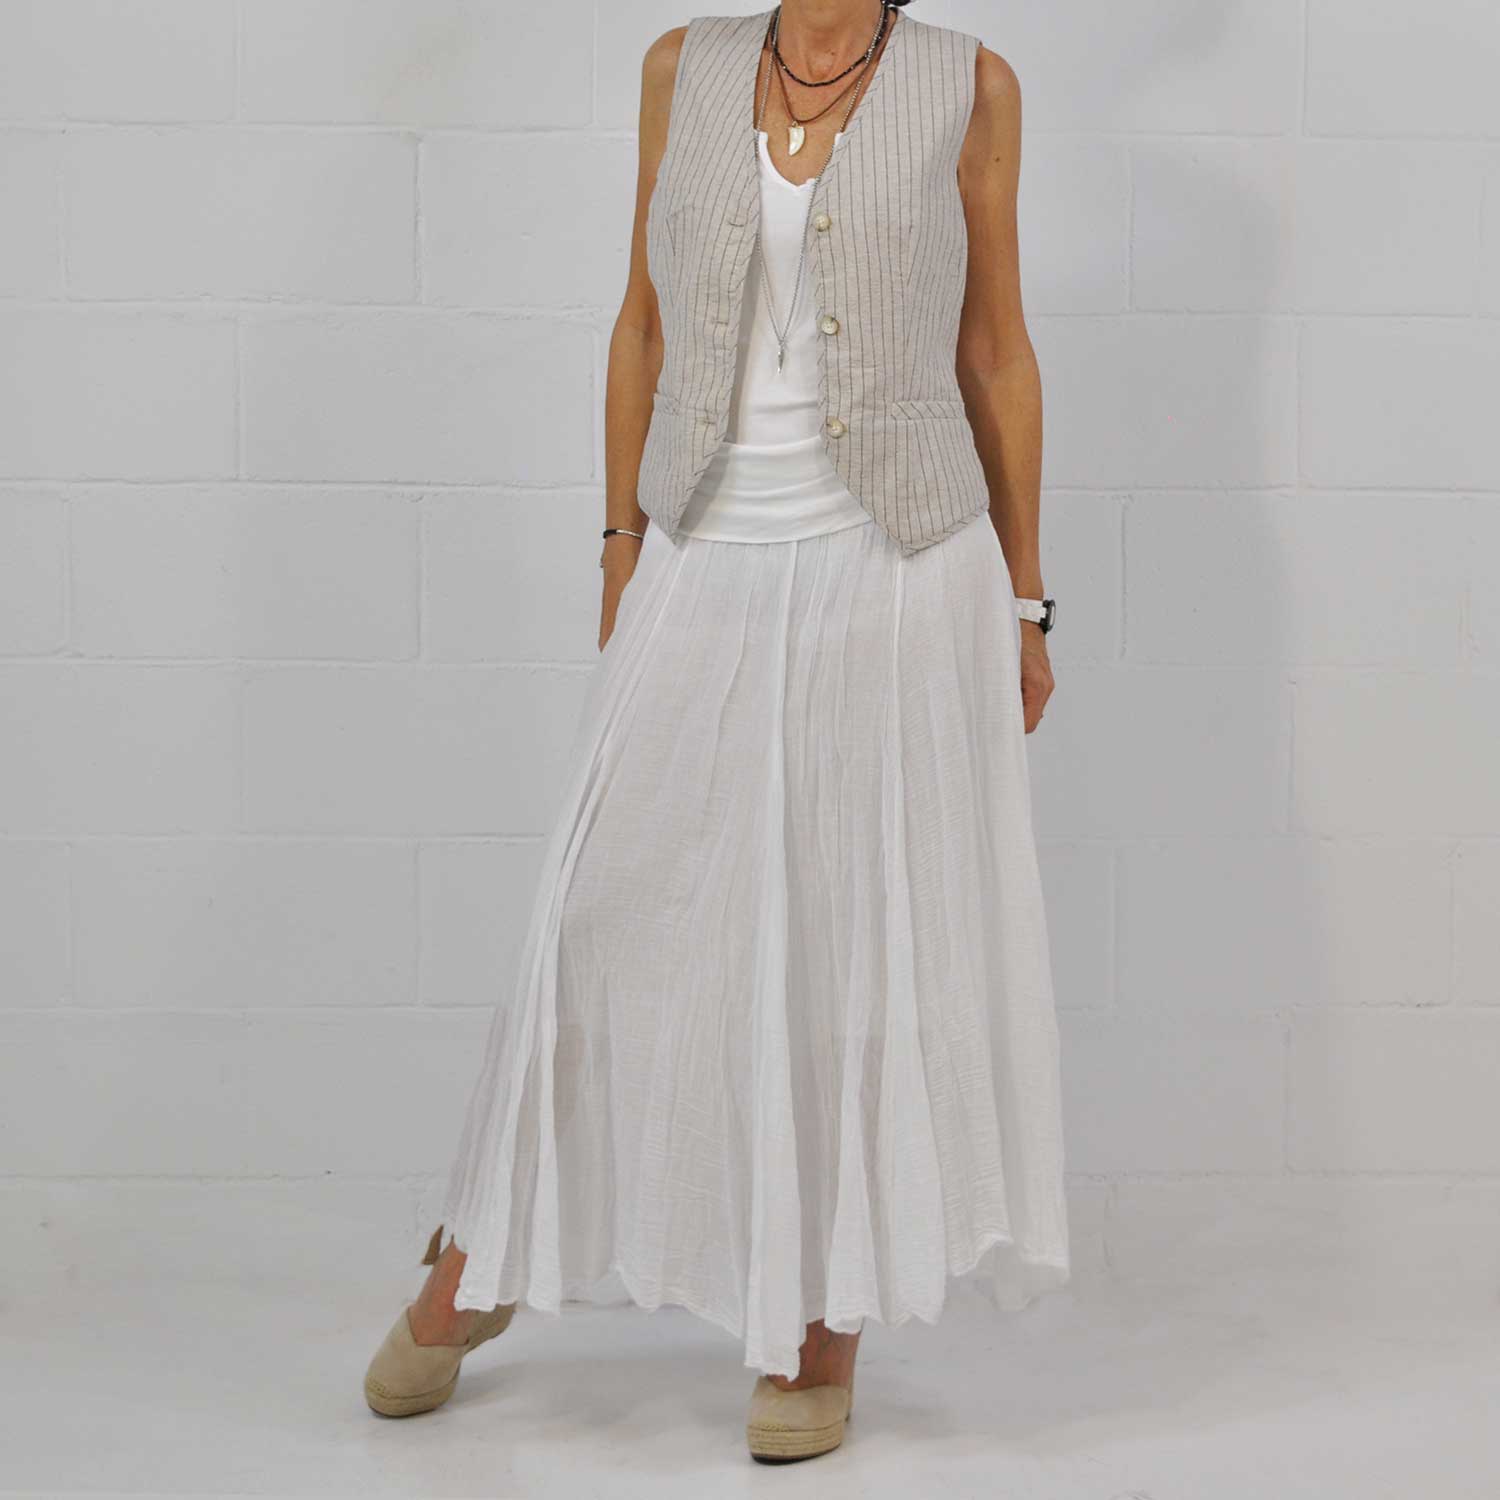 White maxi skirt